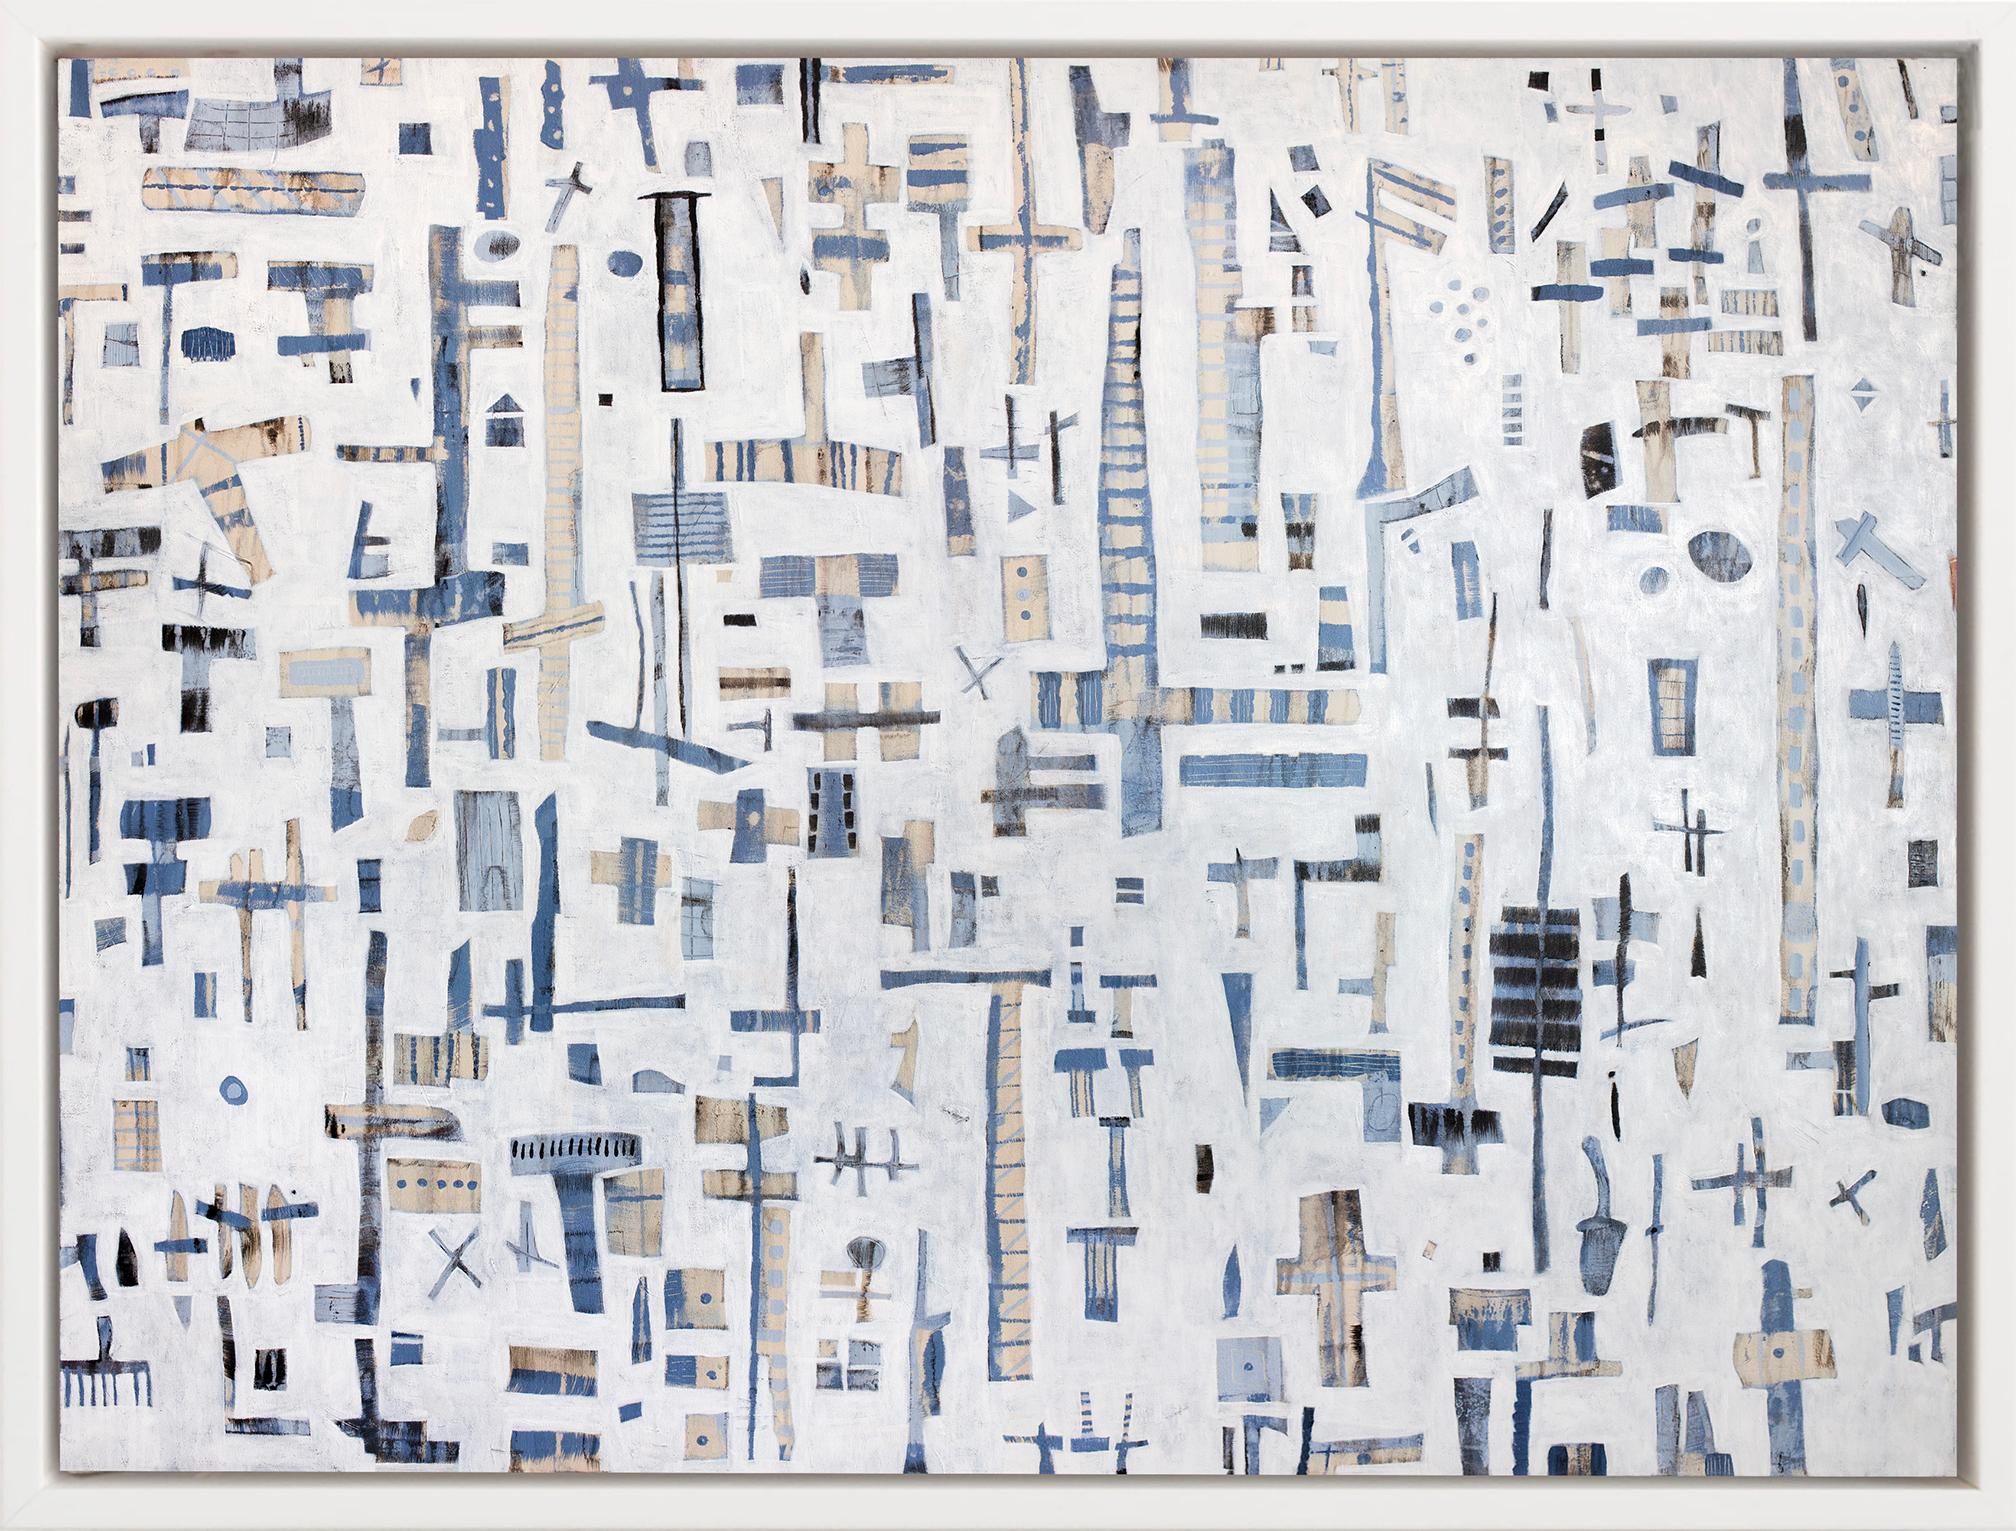 Abstract Print Sofie Swann - "Flight to Nowhere" Impression giclée en édition limitée, 36" x 48"